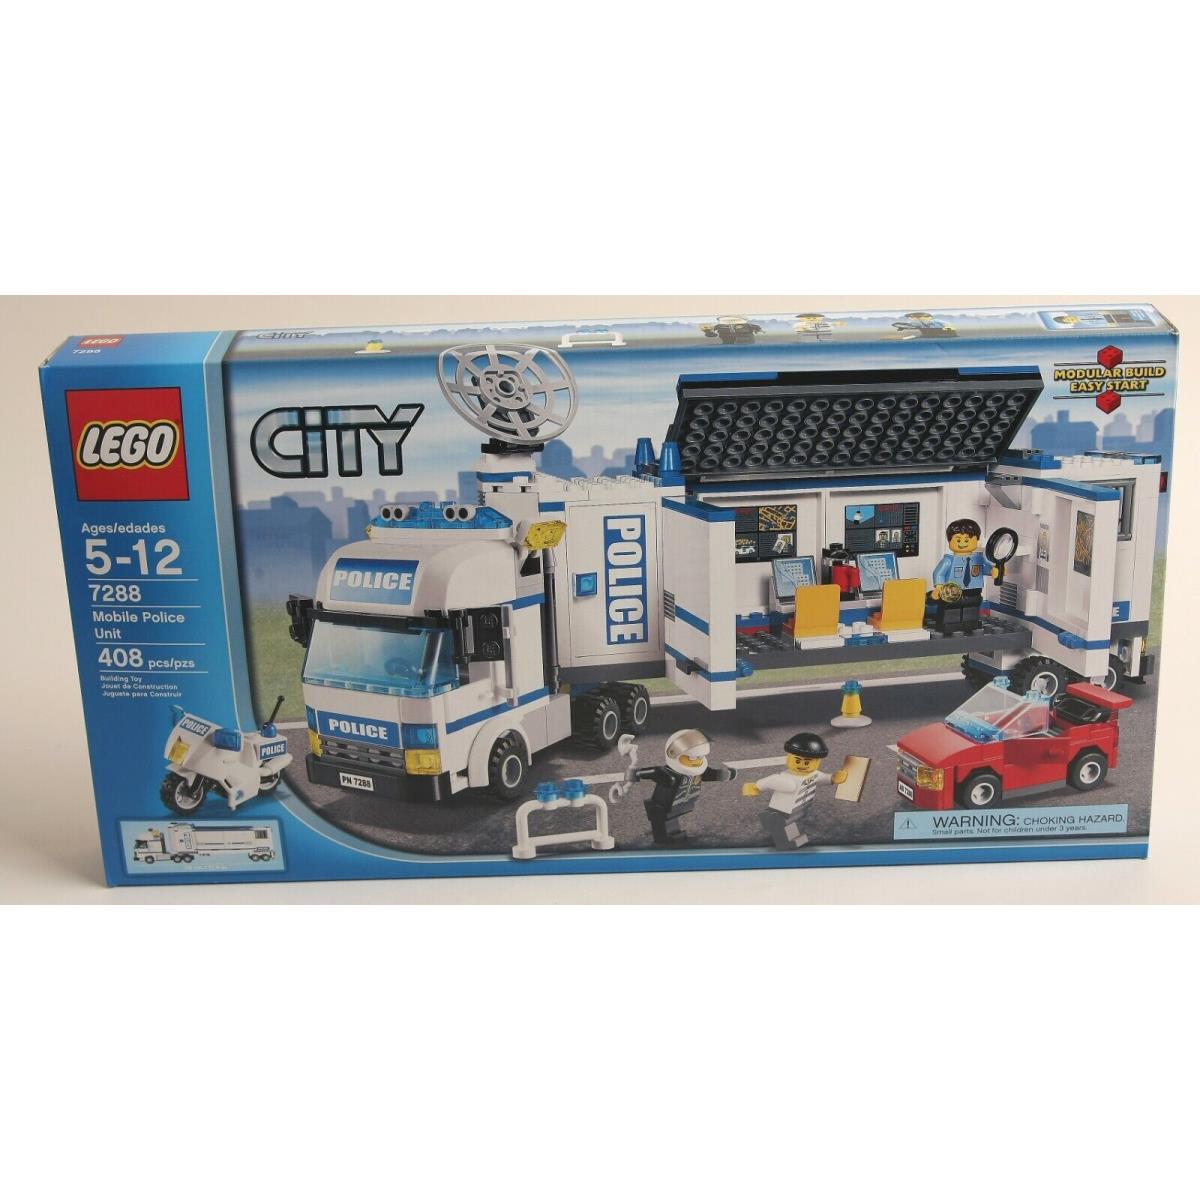 Lego City Police Set 7288 - Mobile Police Unit